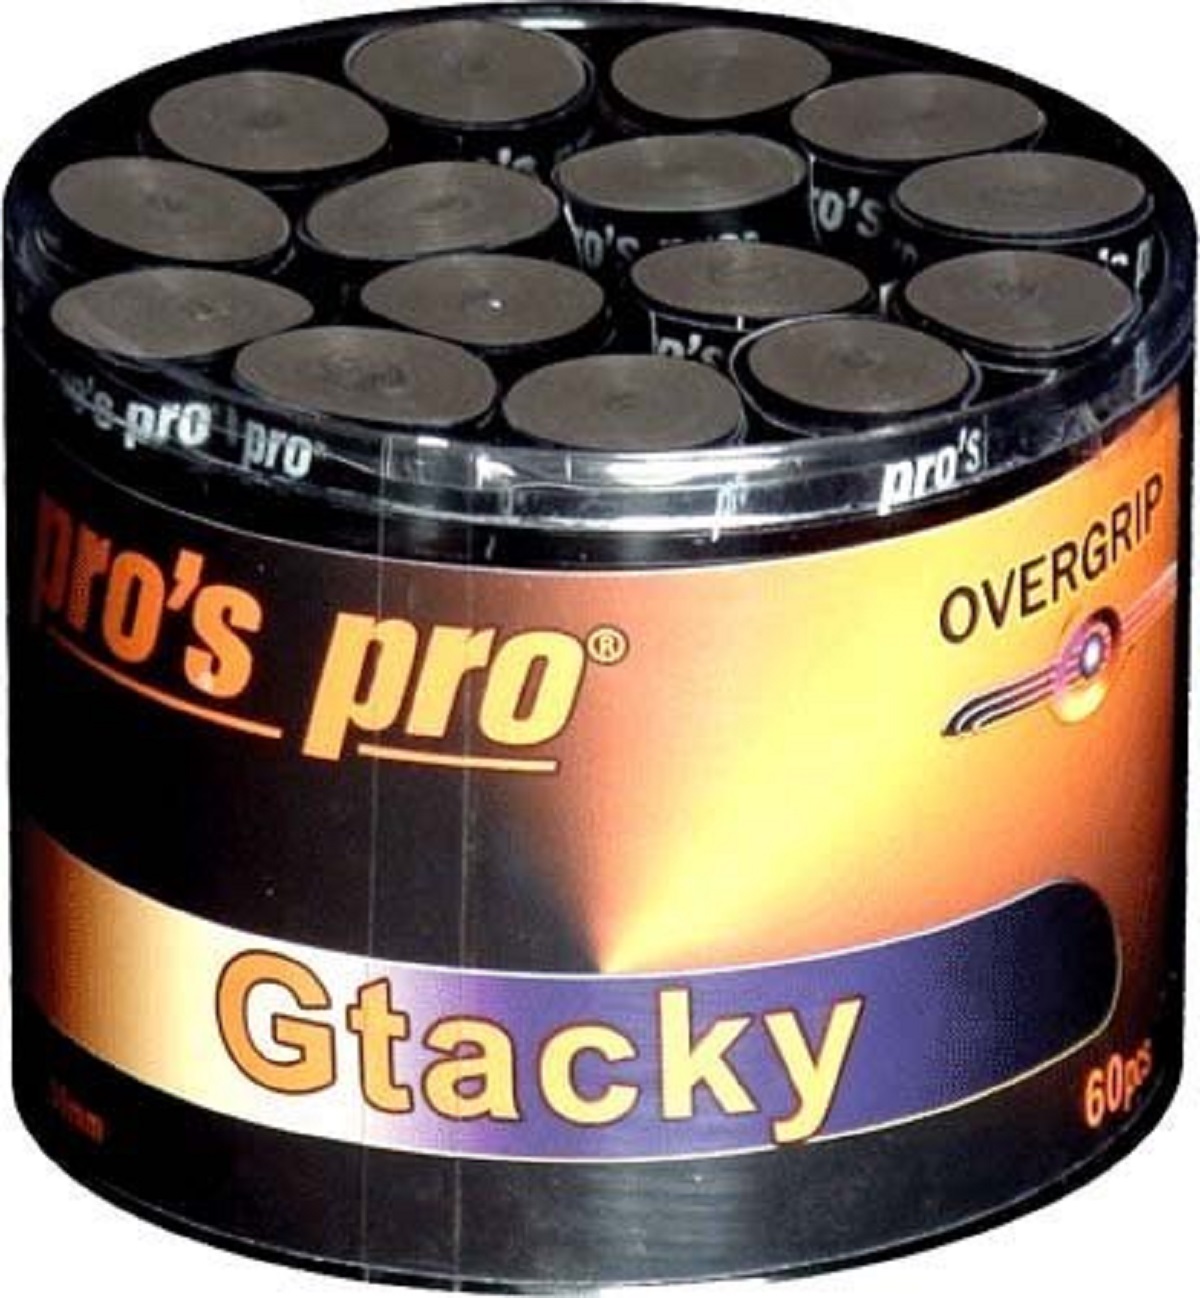 Pros Pro Gtacky Overgrips 60er Set schwarz Griffbänder